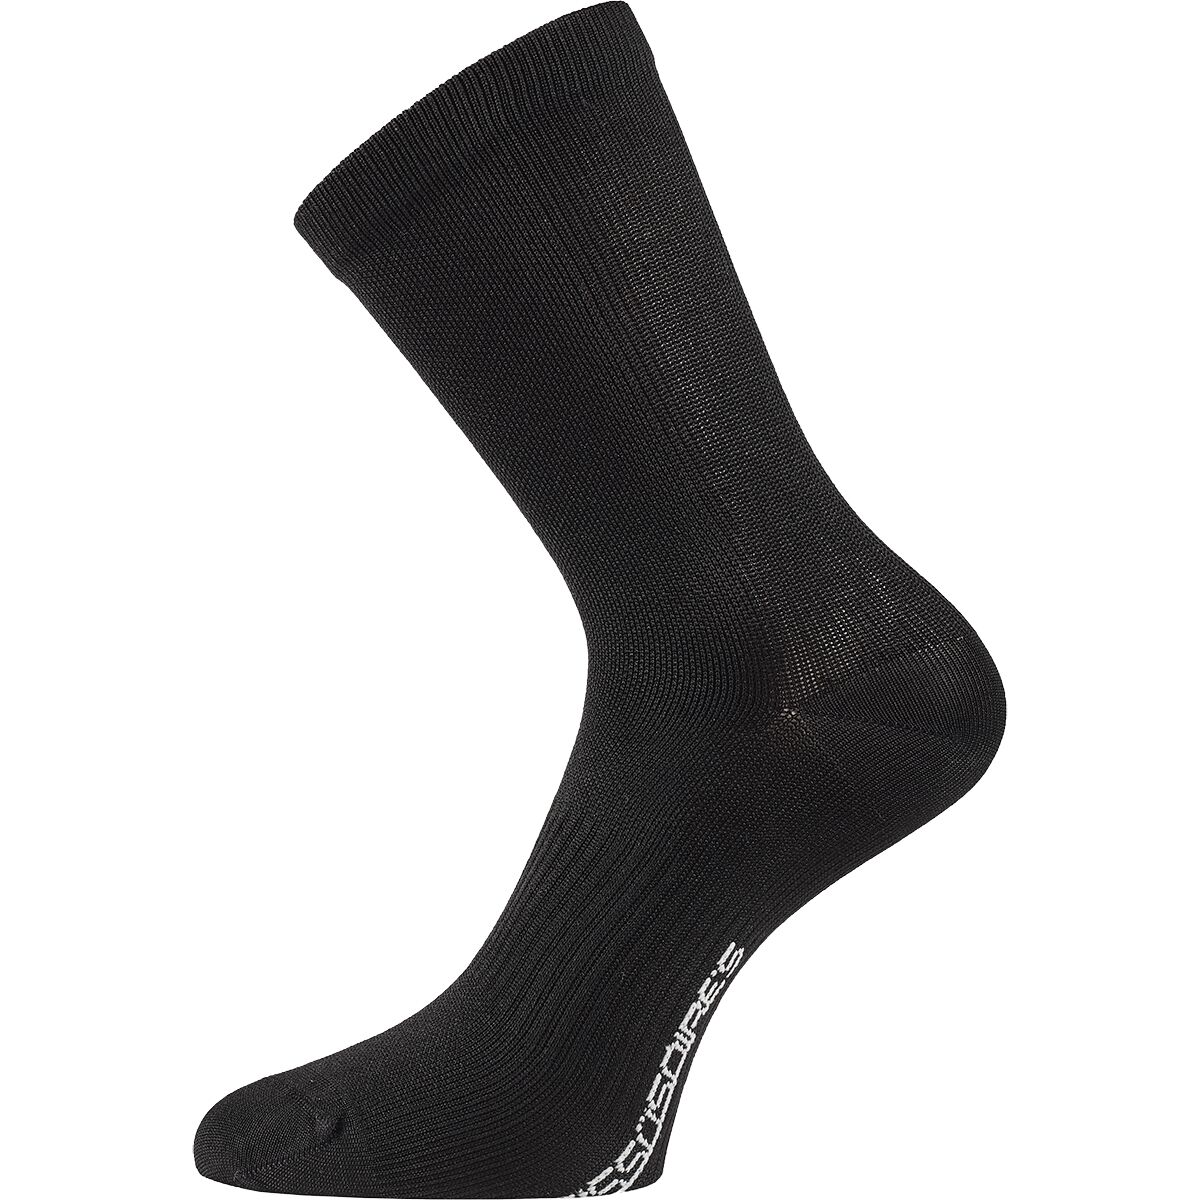 Assos Essence High Sock - 2-Pack blackSeries, I - Men's